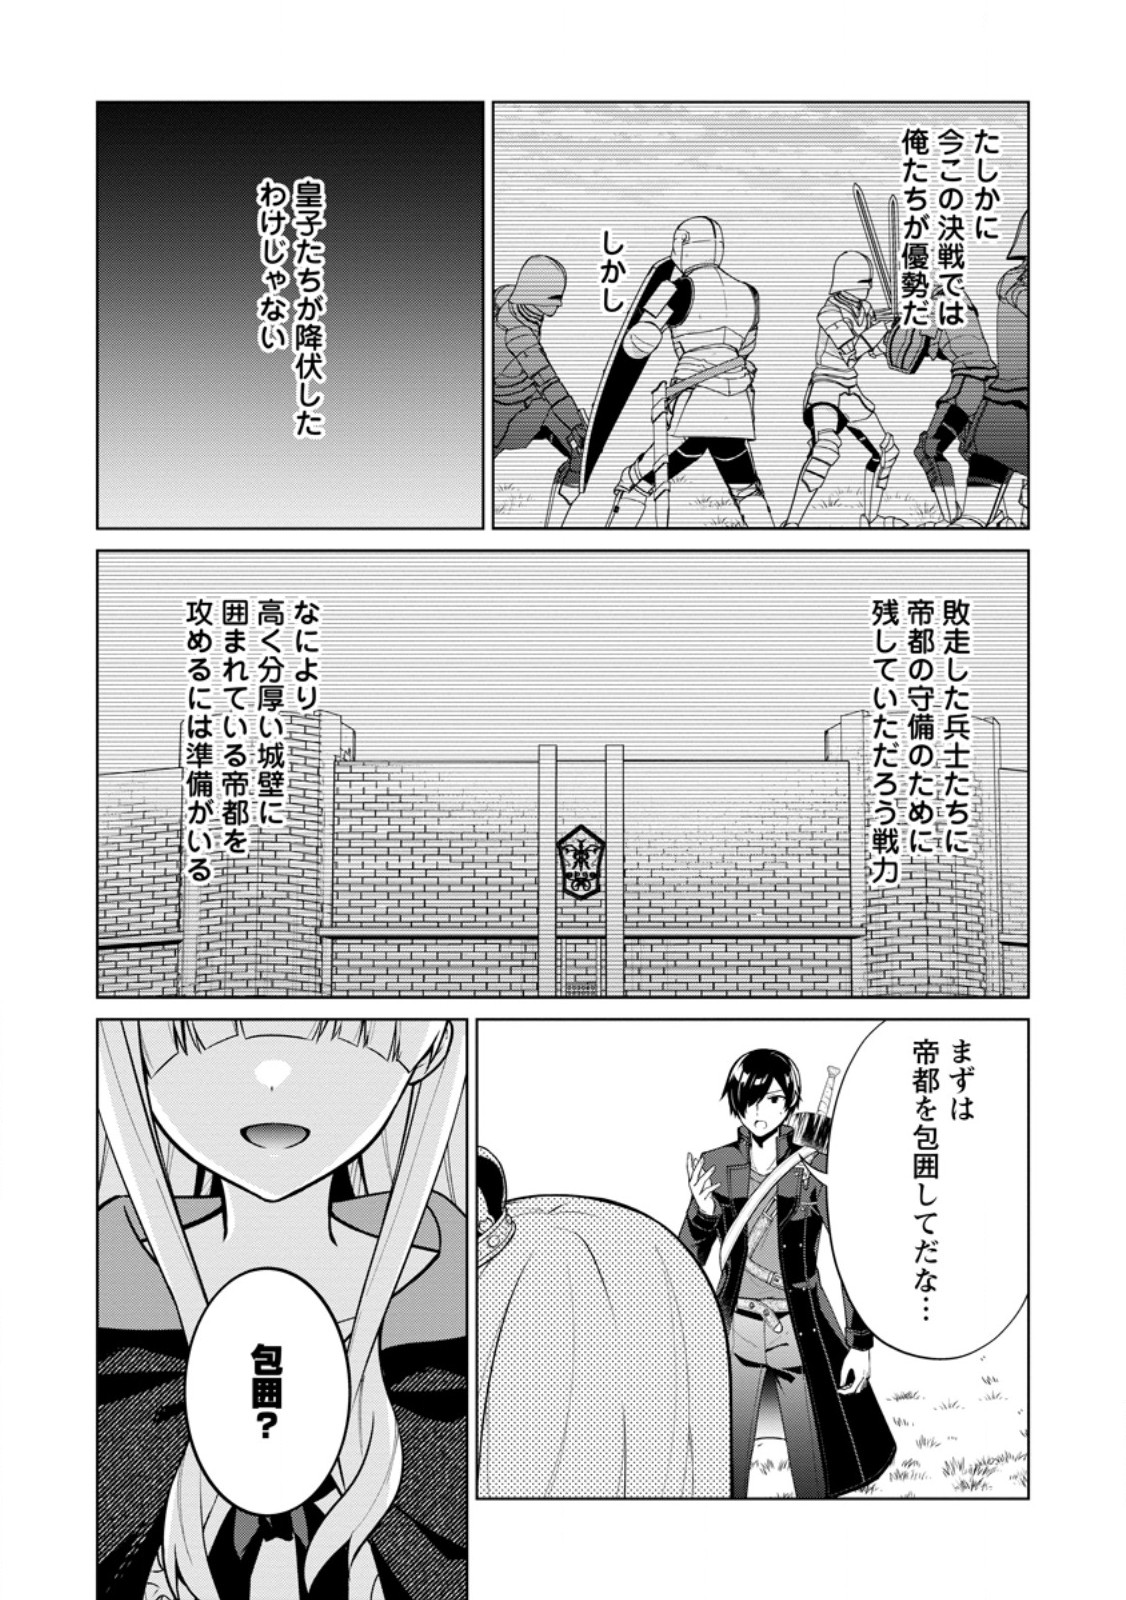 Shingan no Yuusha - Chapter 63.3 - Page 3